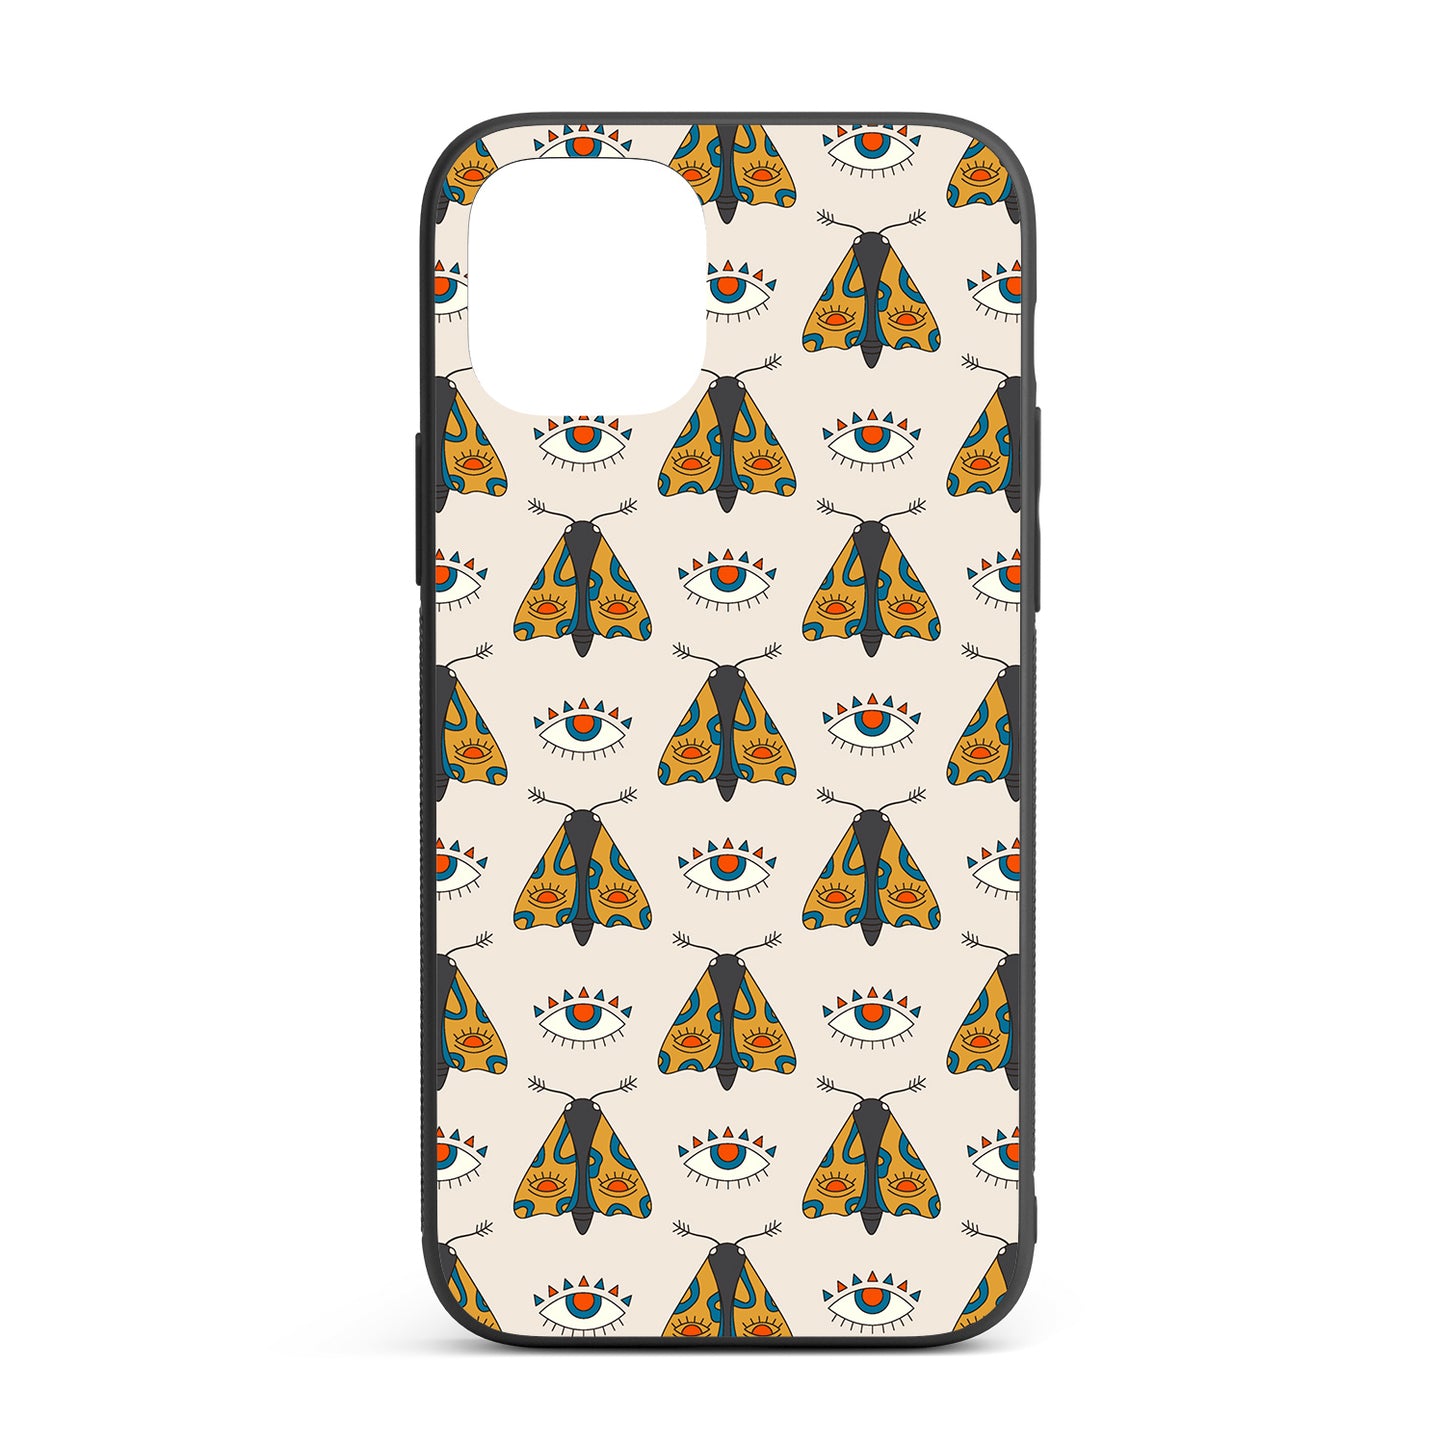 Gypsy Moth iPhone glass case